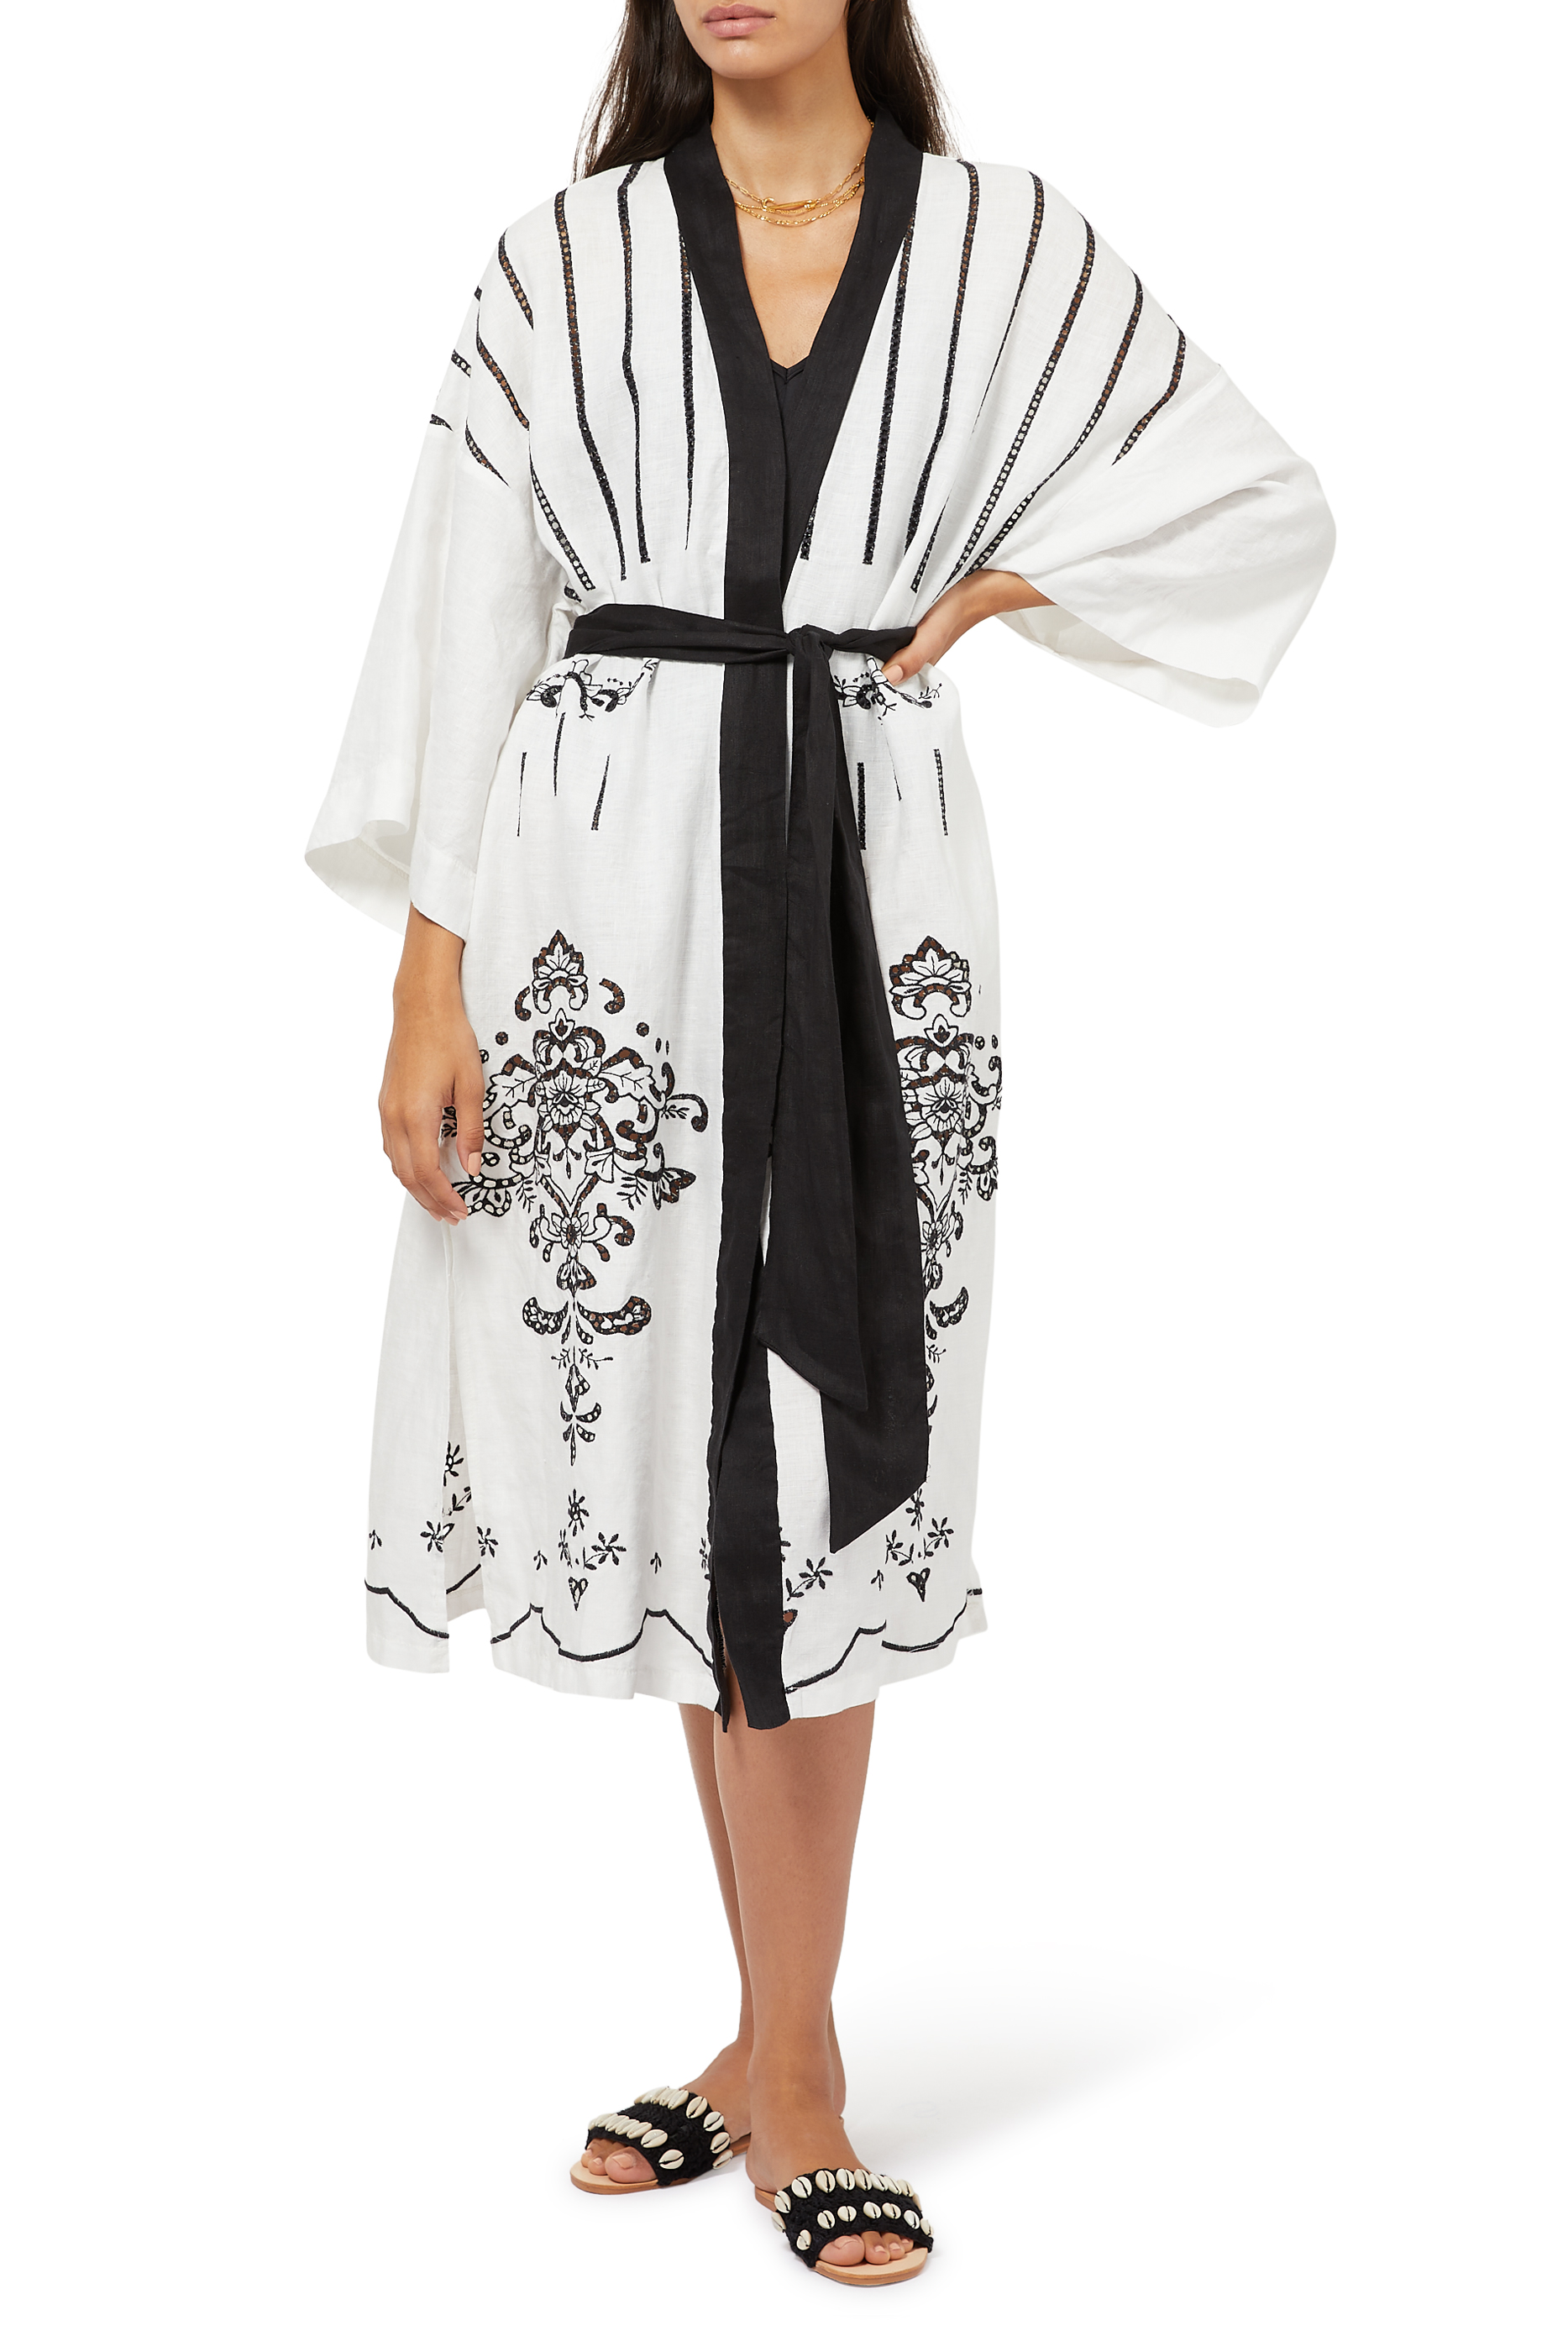 Buy Greek Archaic Kori Belted KimonoStyle Midi Dress for Womens ...